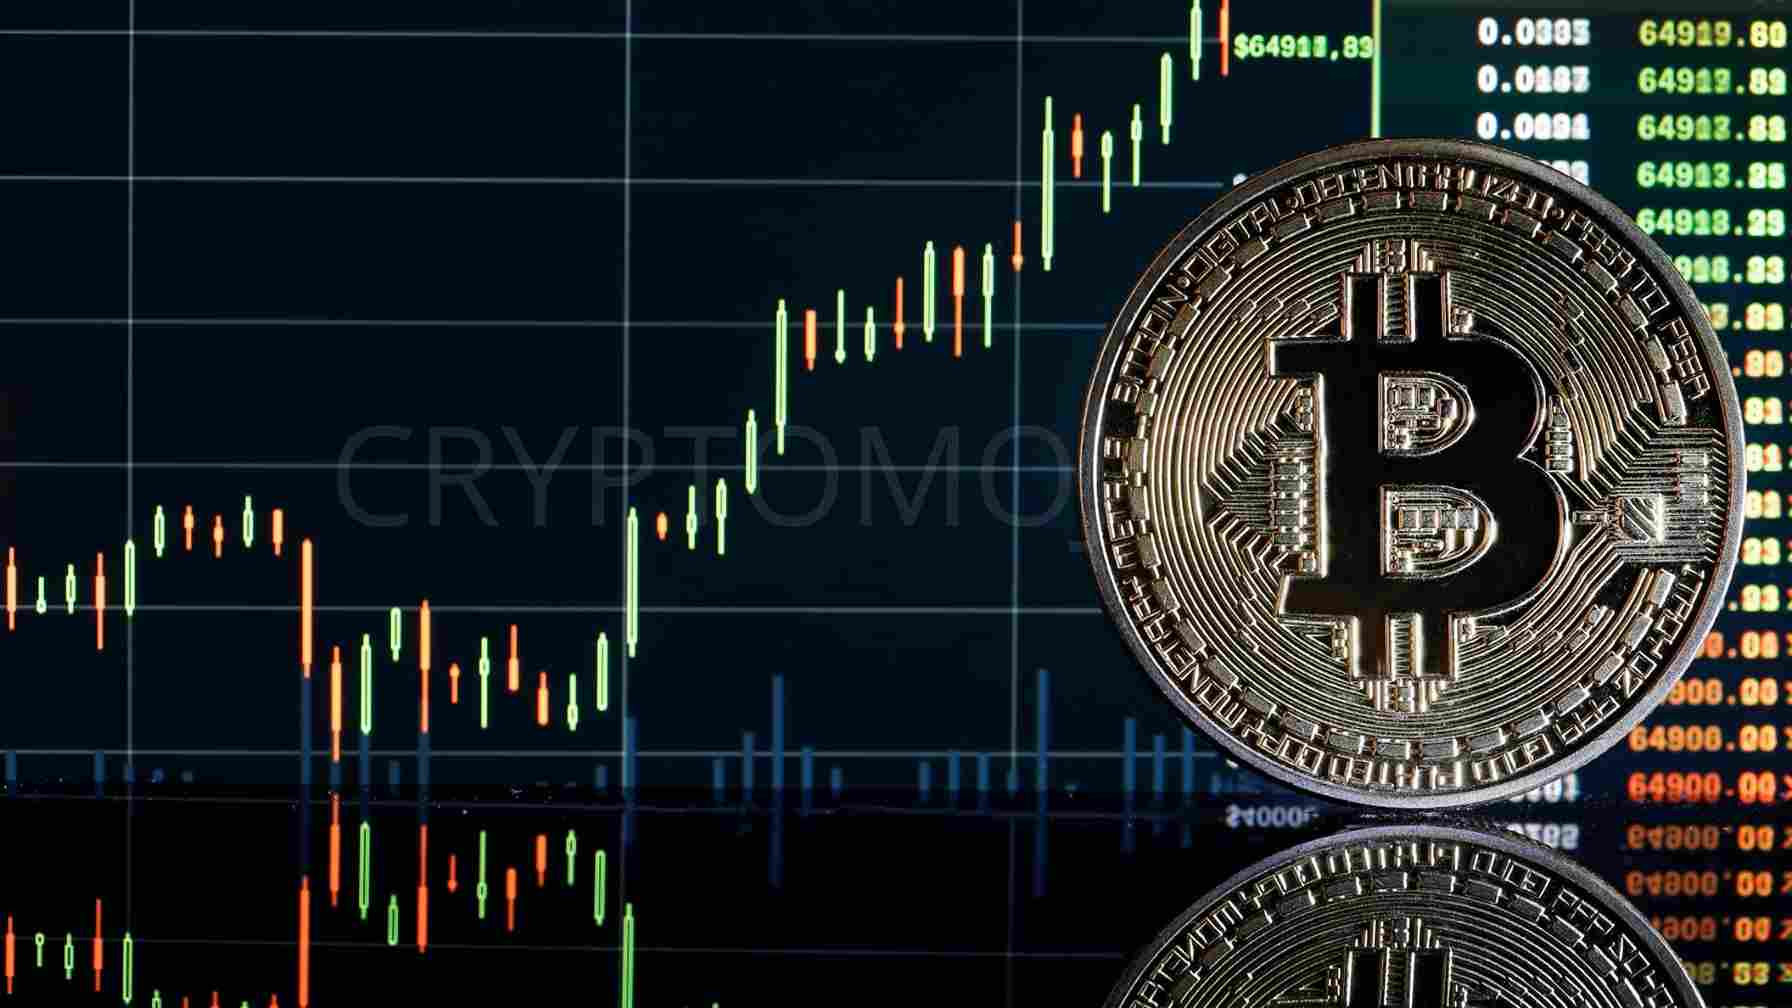 After A Sharp Crypto Selloff, Bitcoin’s Price Has Risen Above $20,000